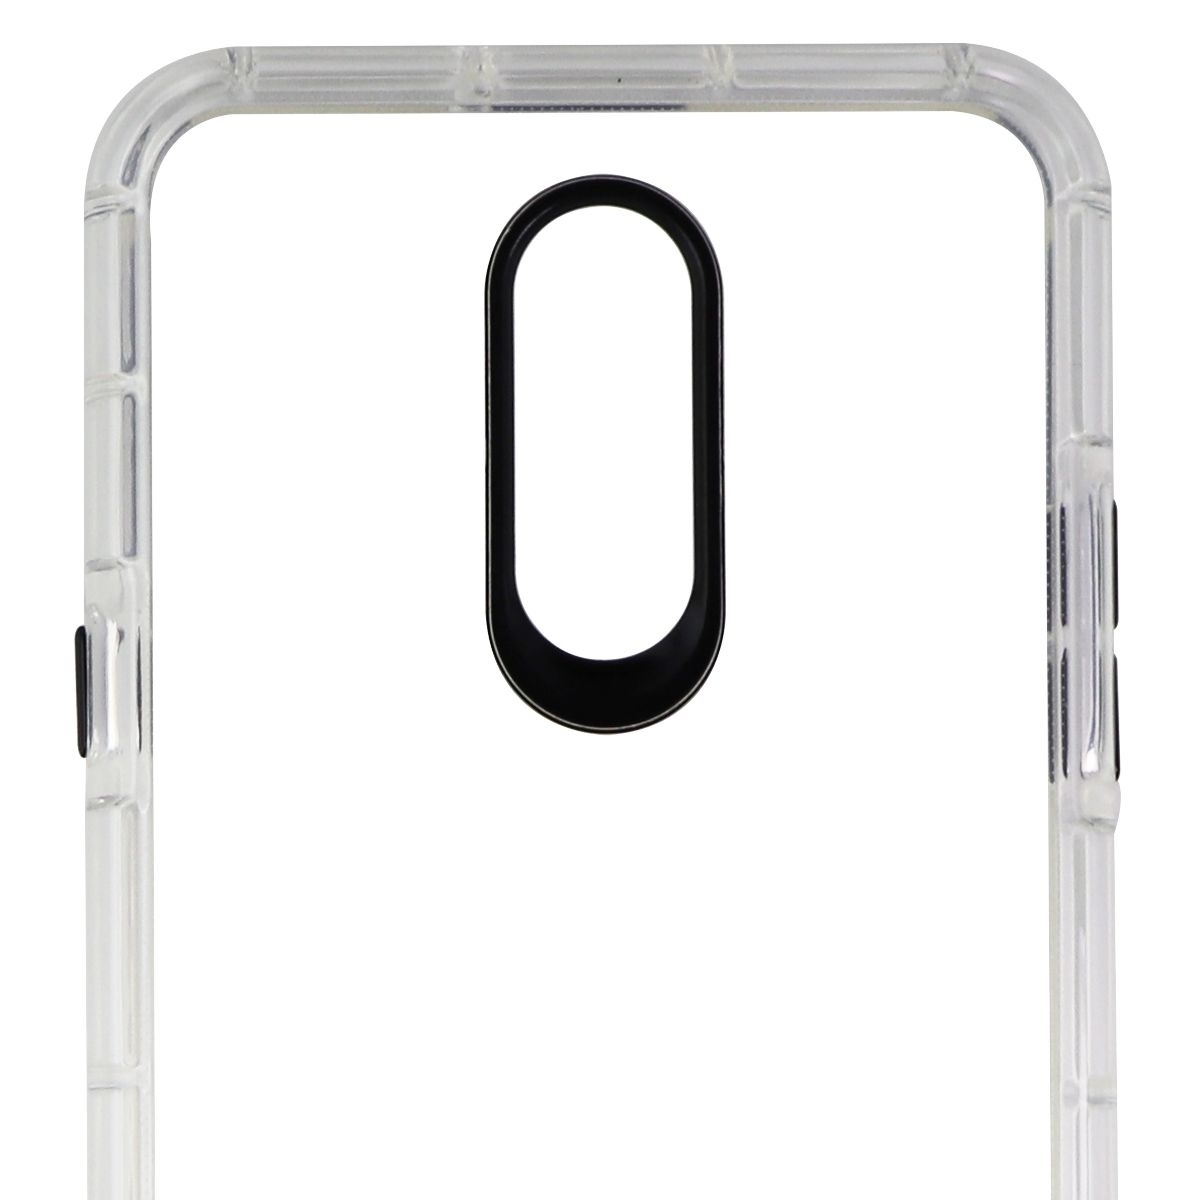 Nimbus9 Vantage Series Flexible Gel Case For LG Stylo 5 Plus / Stylo 5 - Clear